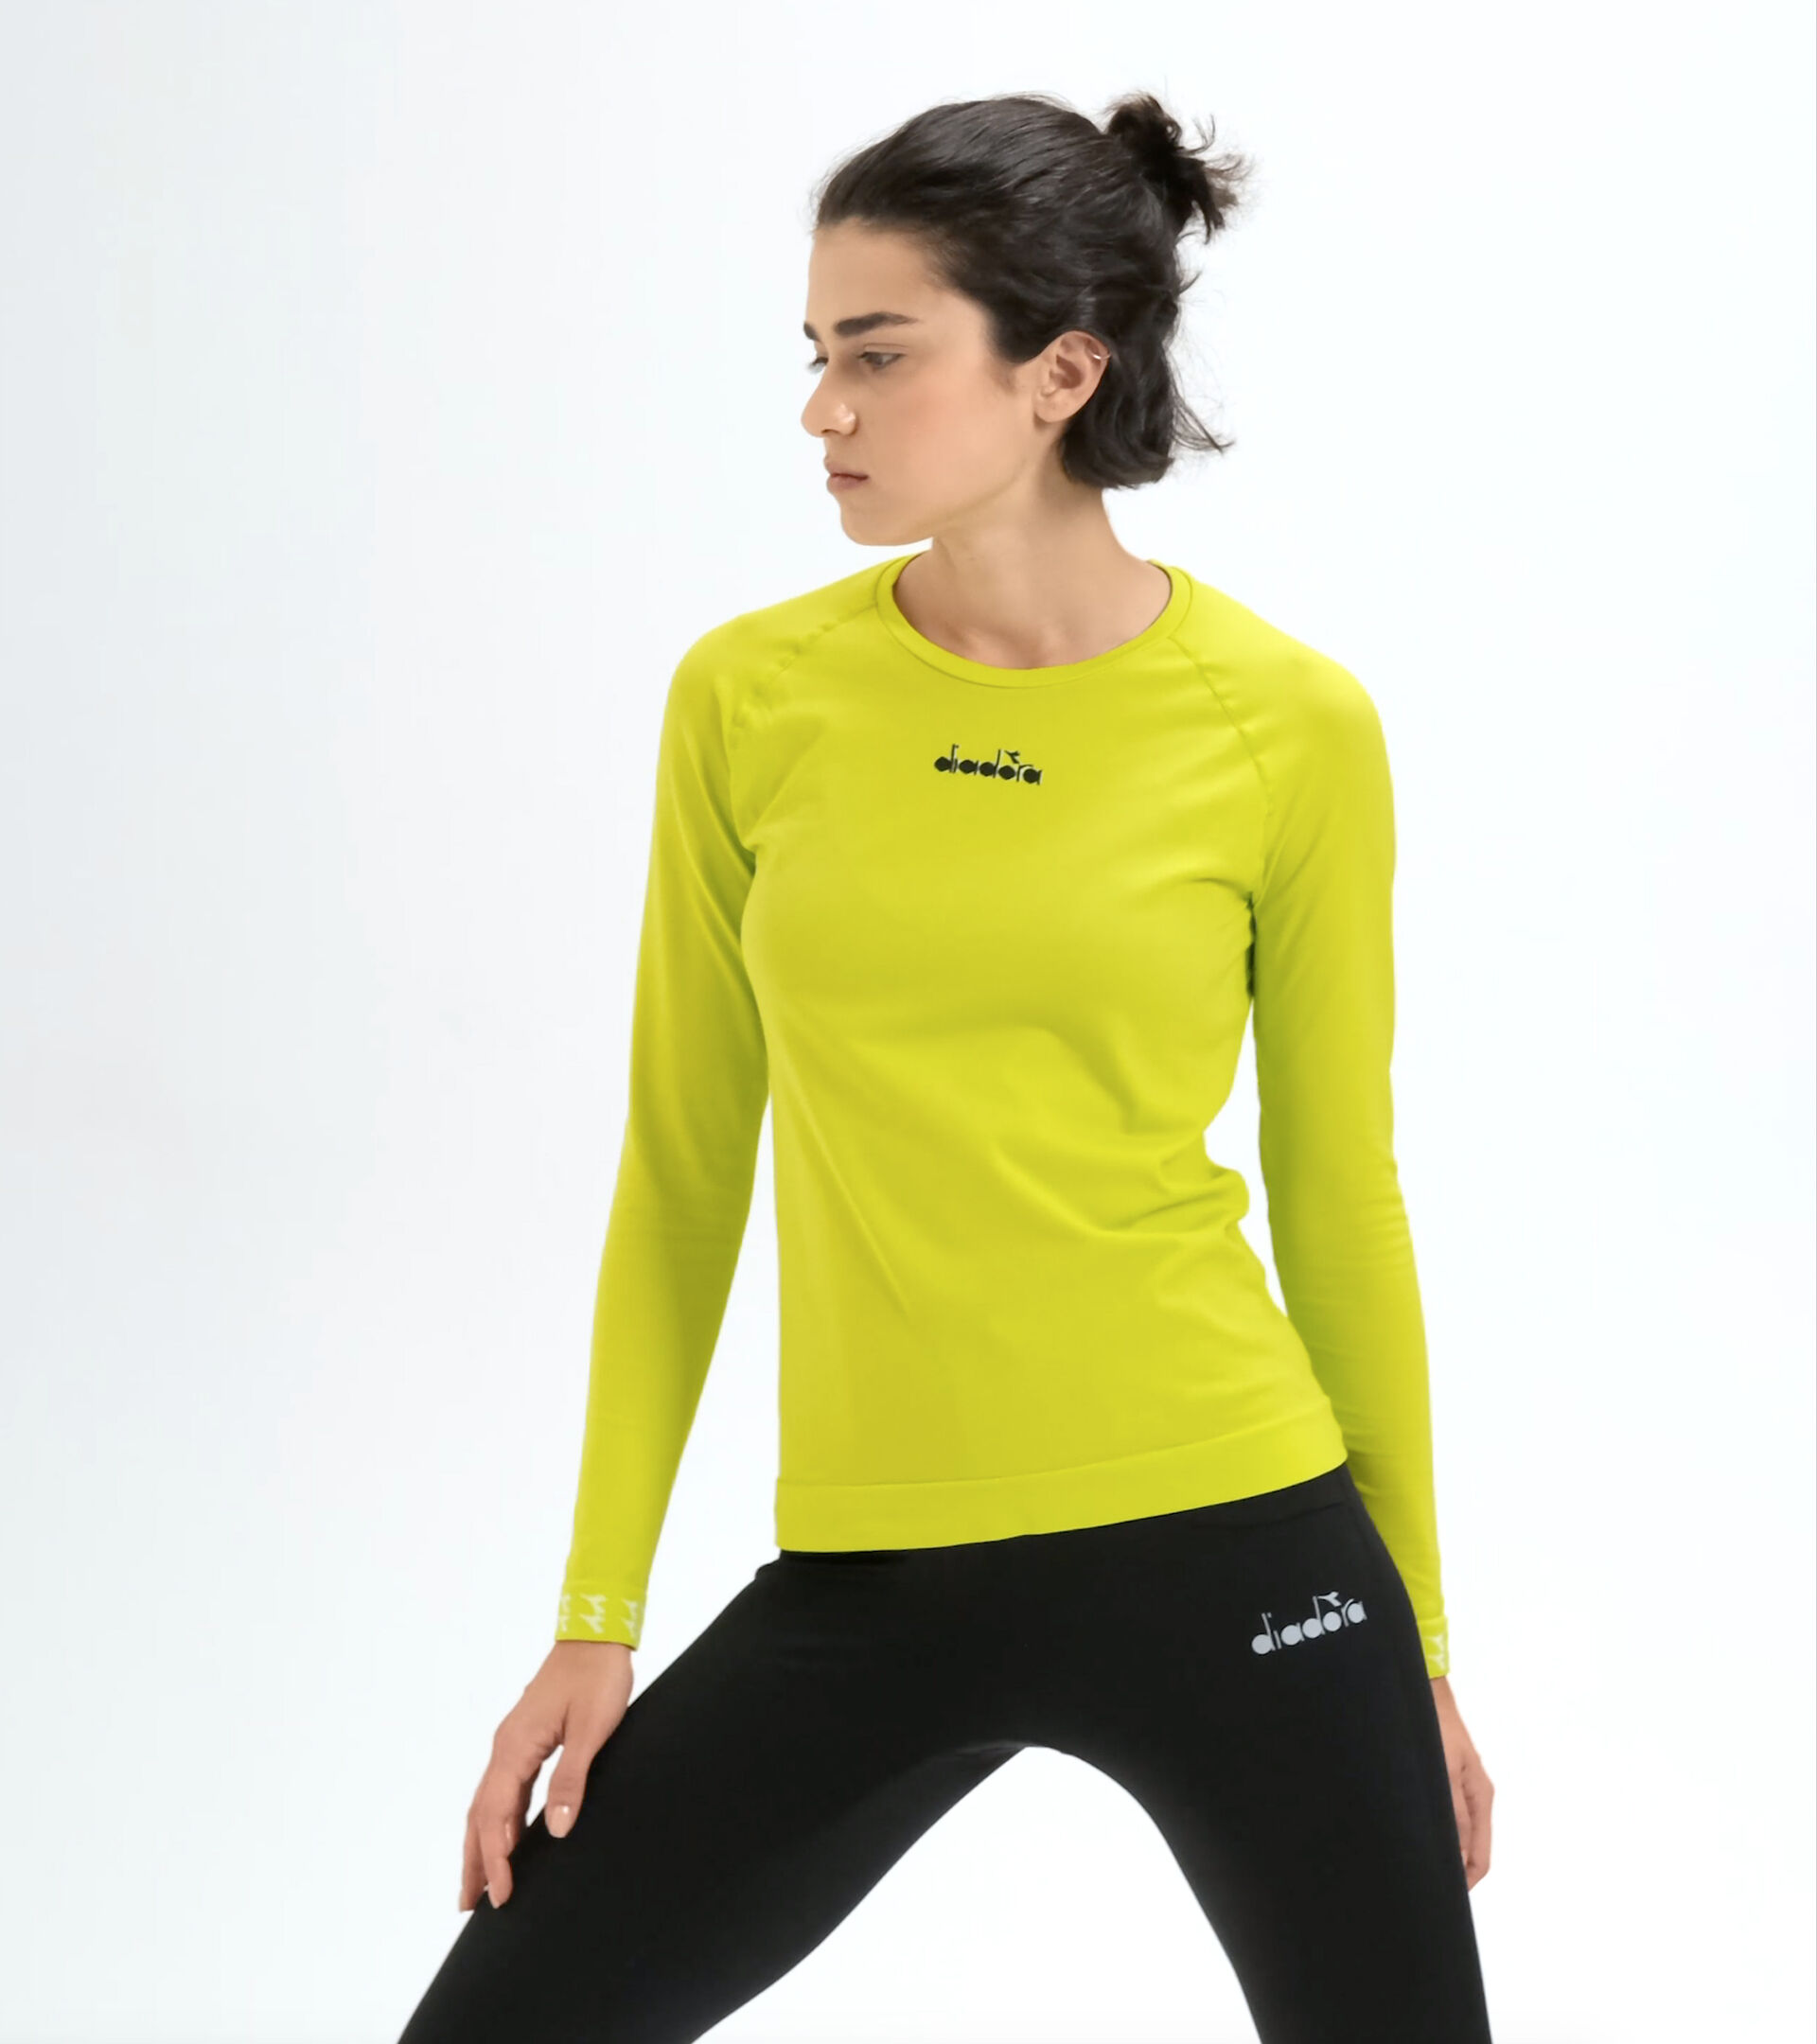 Camiseta para correr Made in Italy - Mujer L. LS SKIN FRIENDLY T-SHIRT MANANTIALES DE SULFURO - Diadora